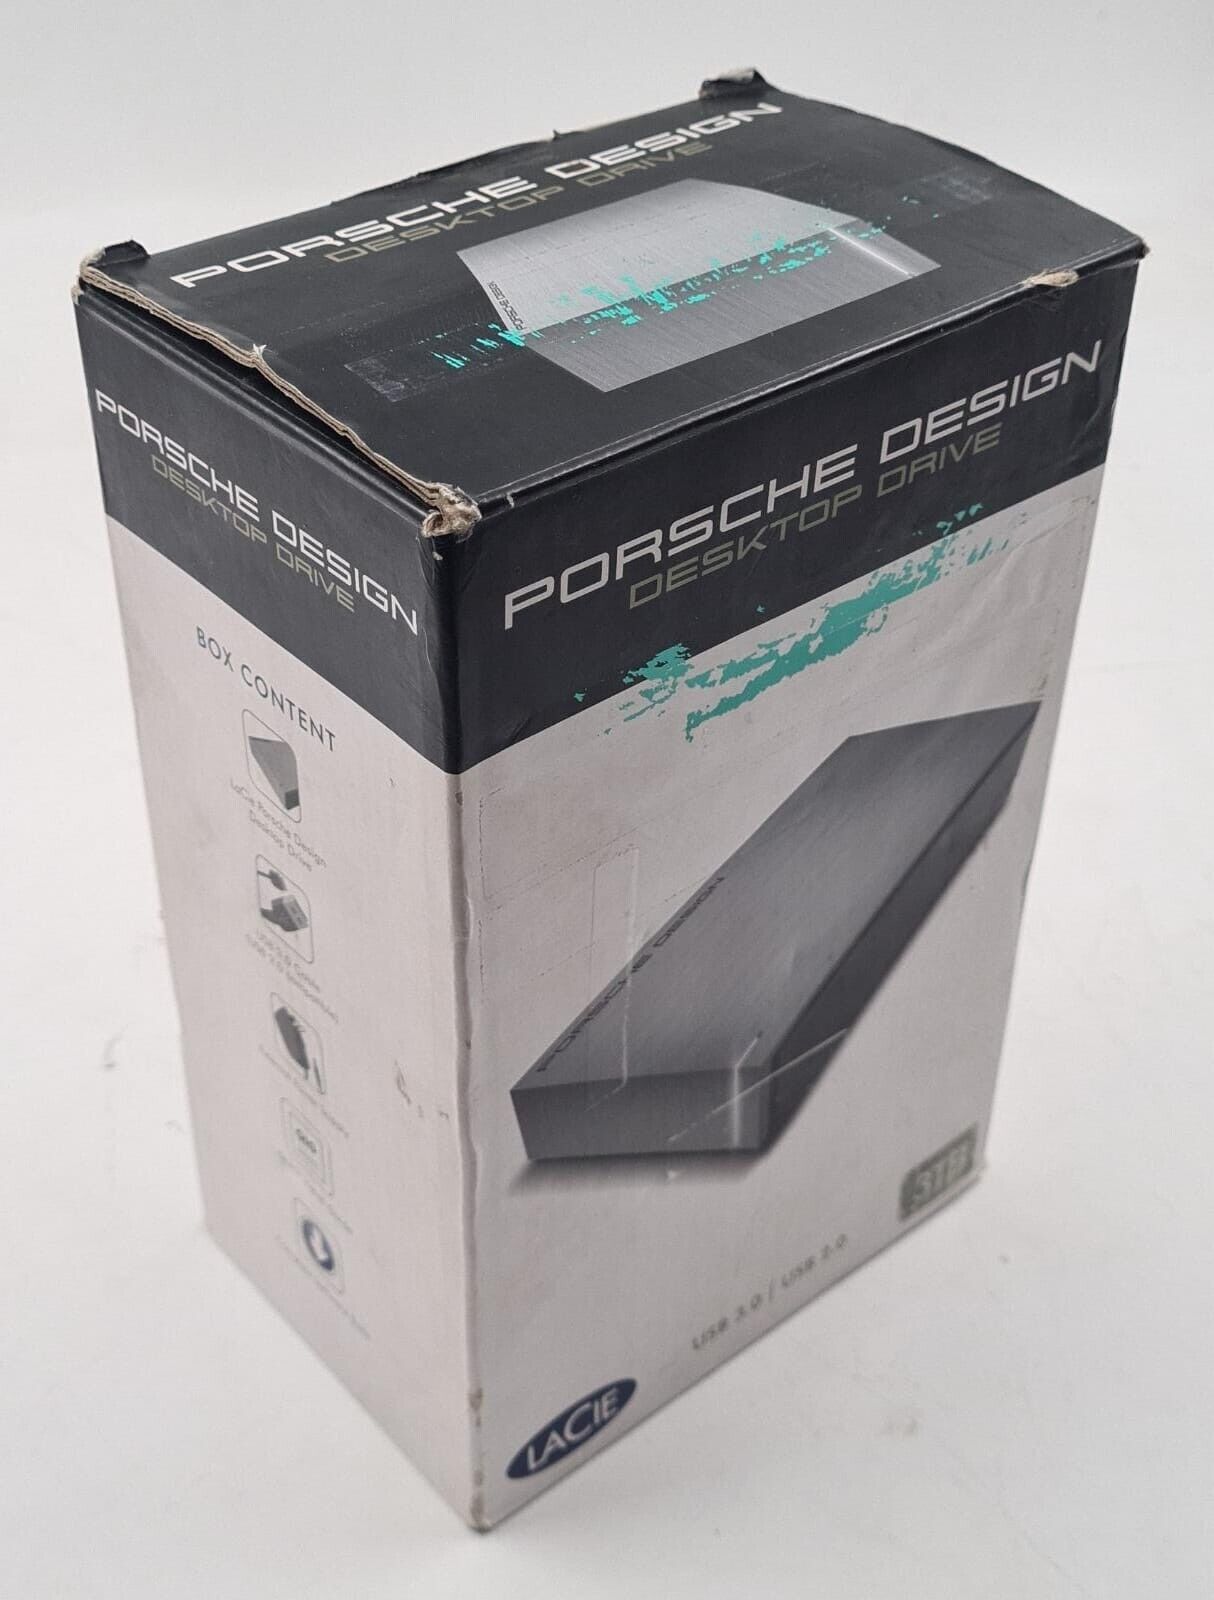 NEW - LACIE Porsche Design DESKTOP hard drive 3TB USB 3.0 / 2.0